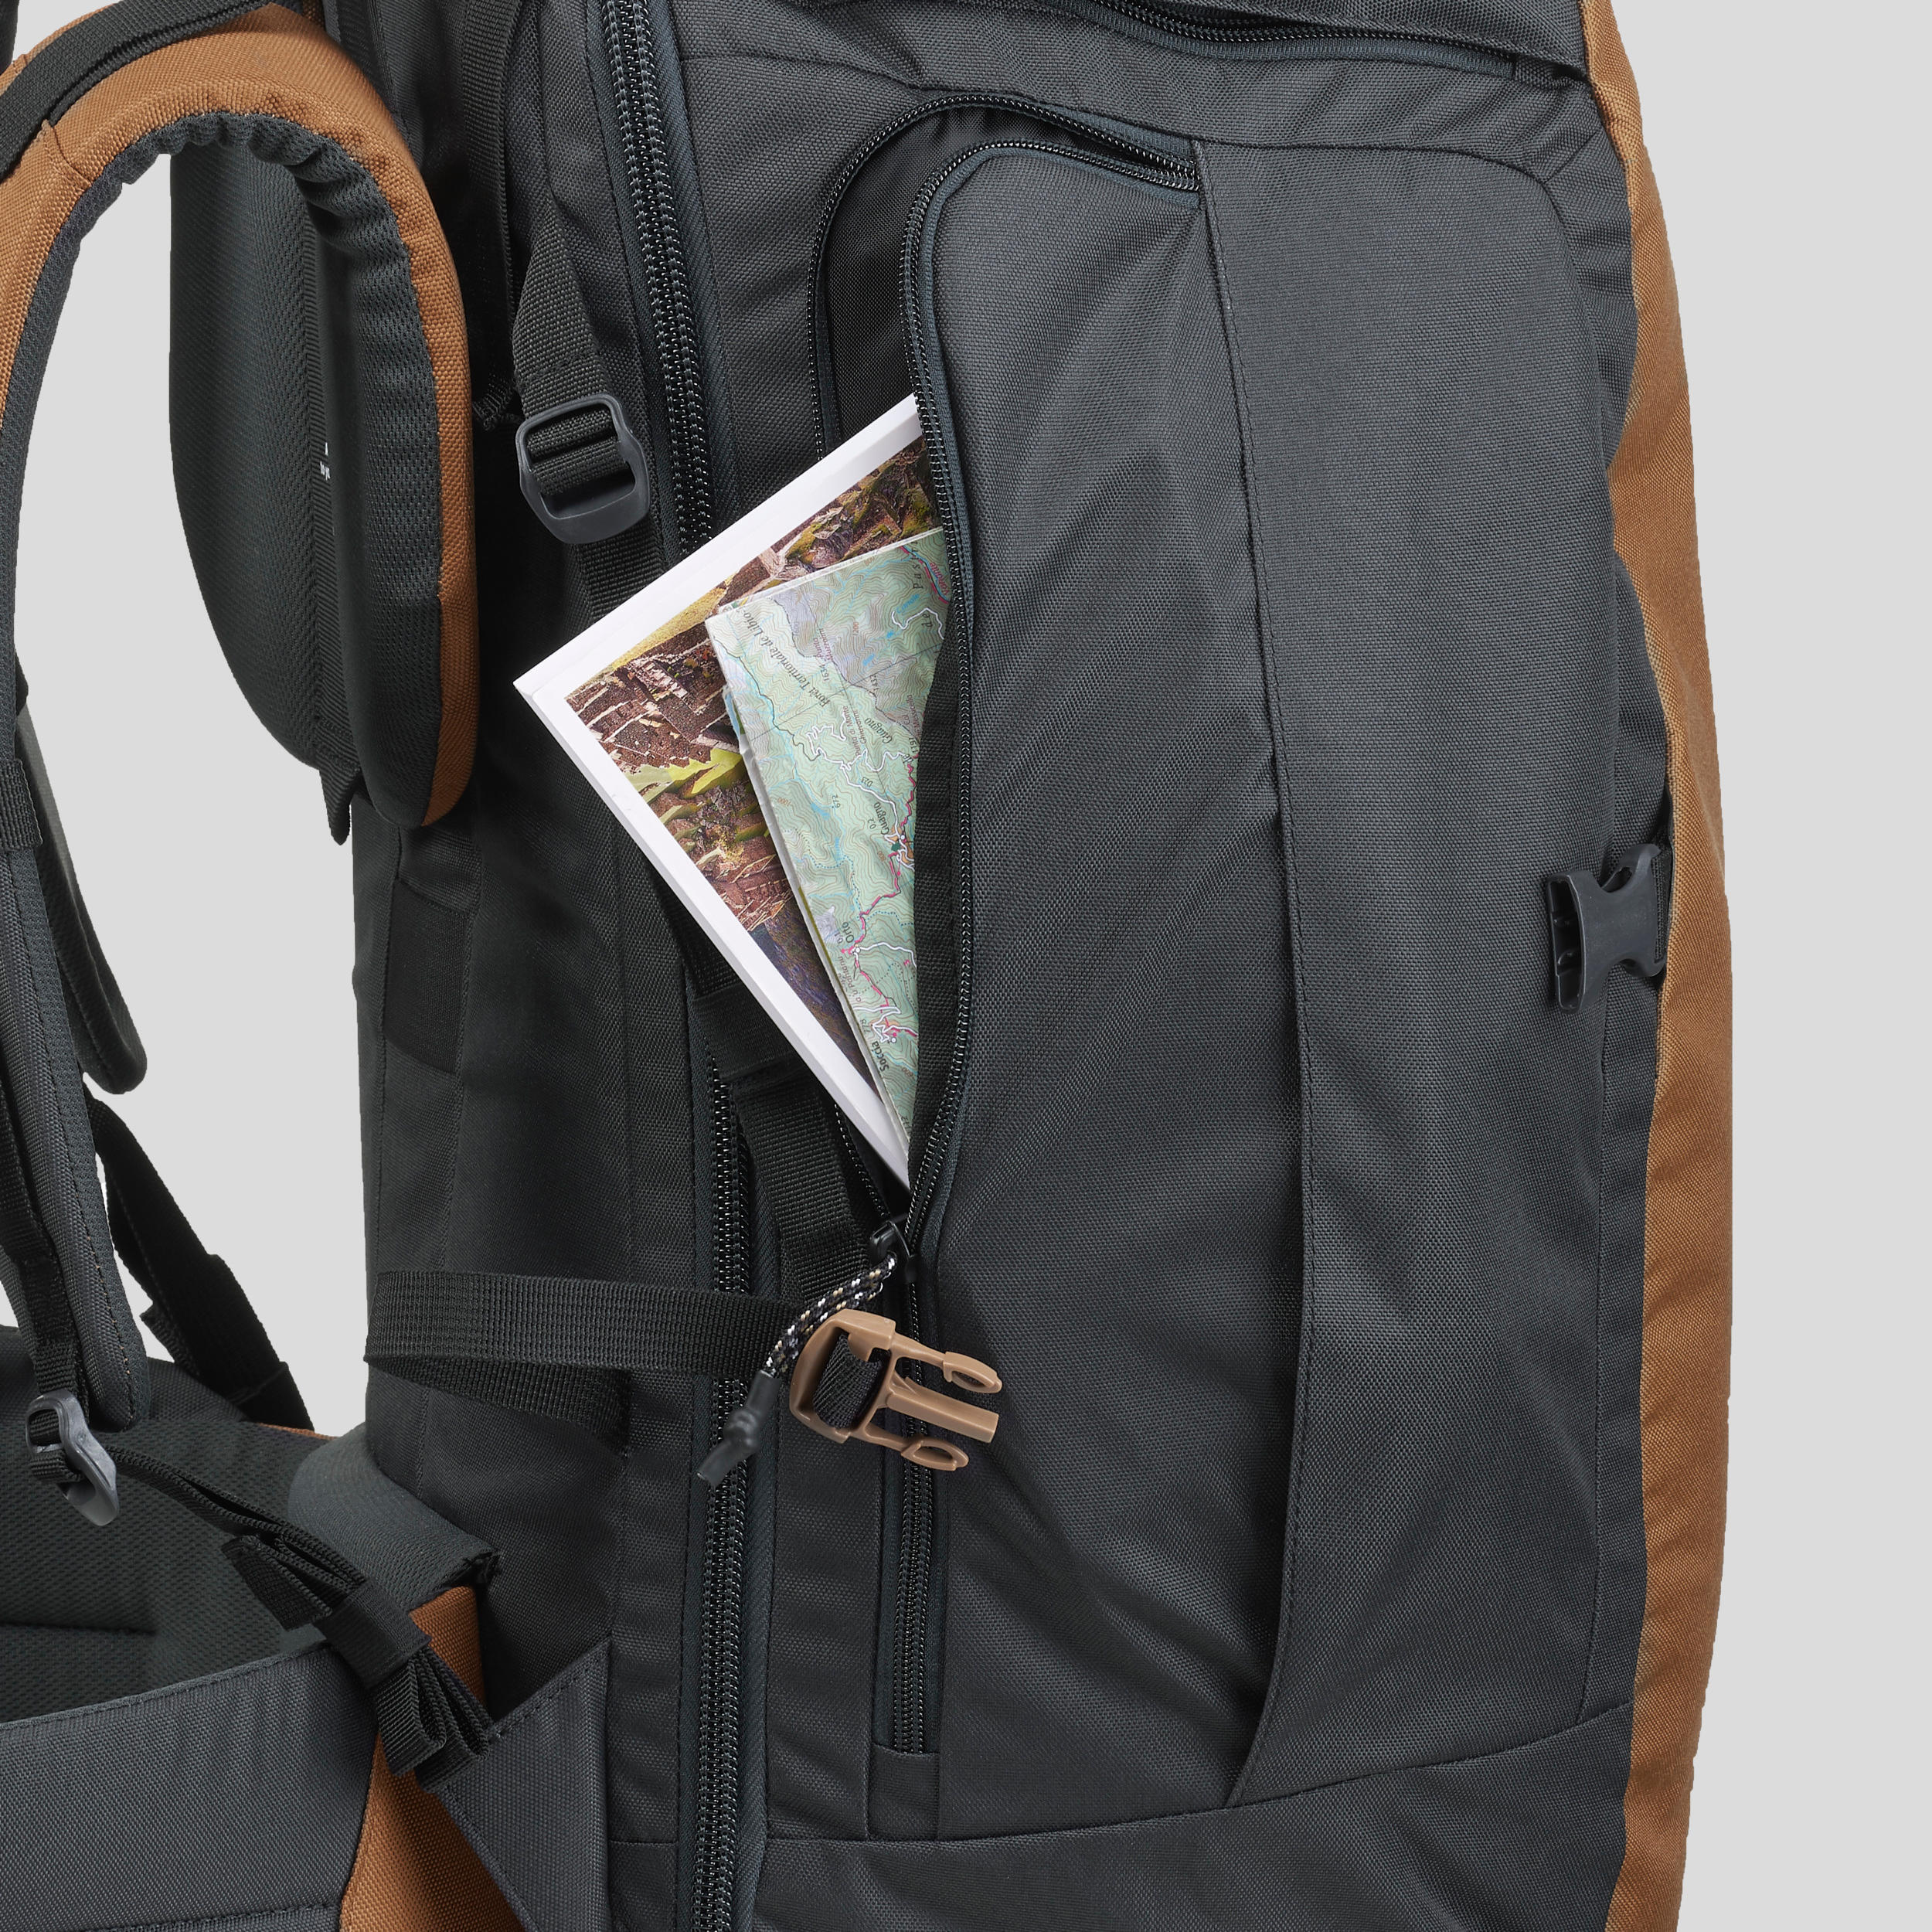 Travel backpack 60L - Travel 100 10/17